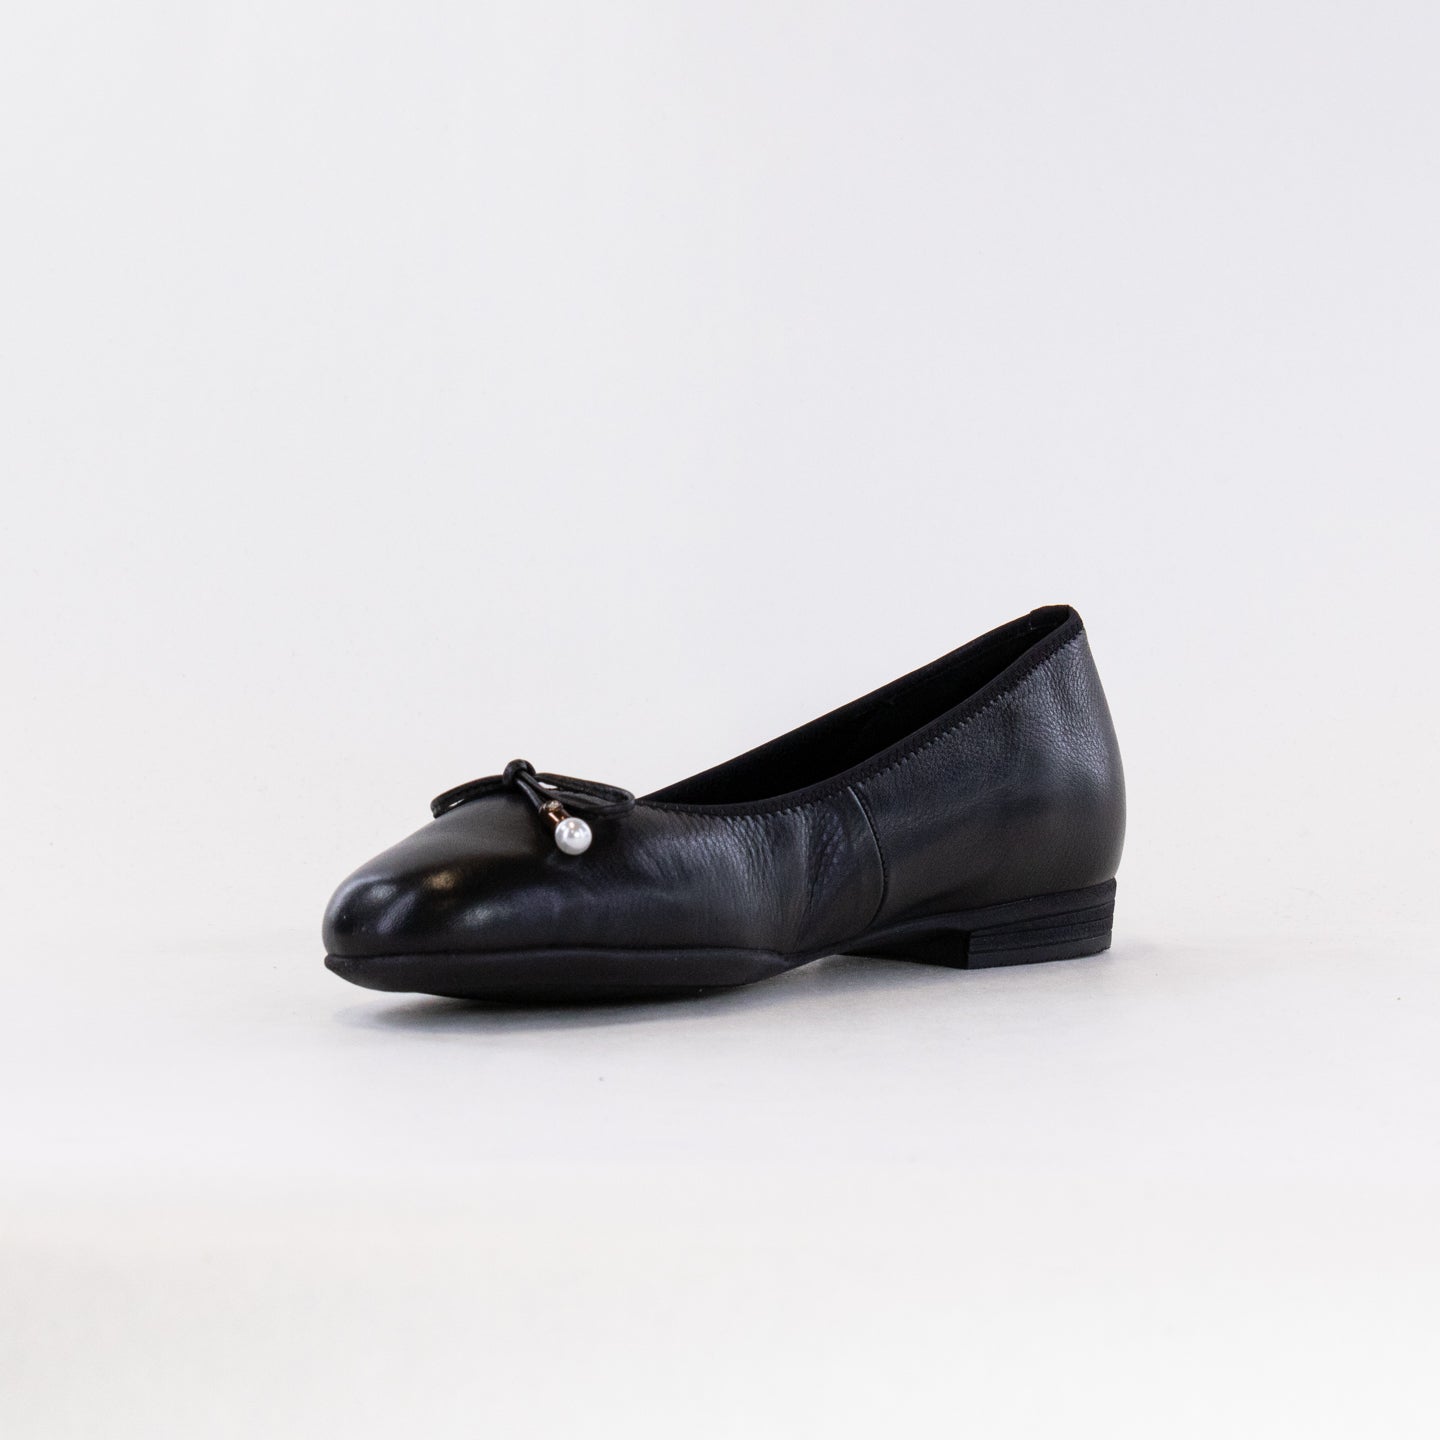 Ara Scout Bow Ballet Flat (Women's) - Black Leather